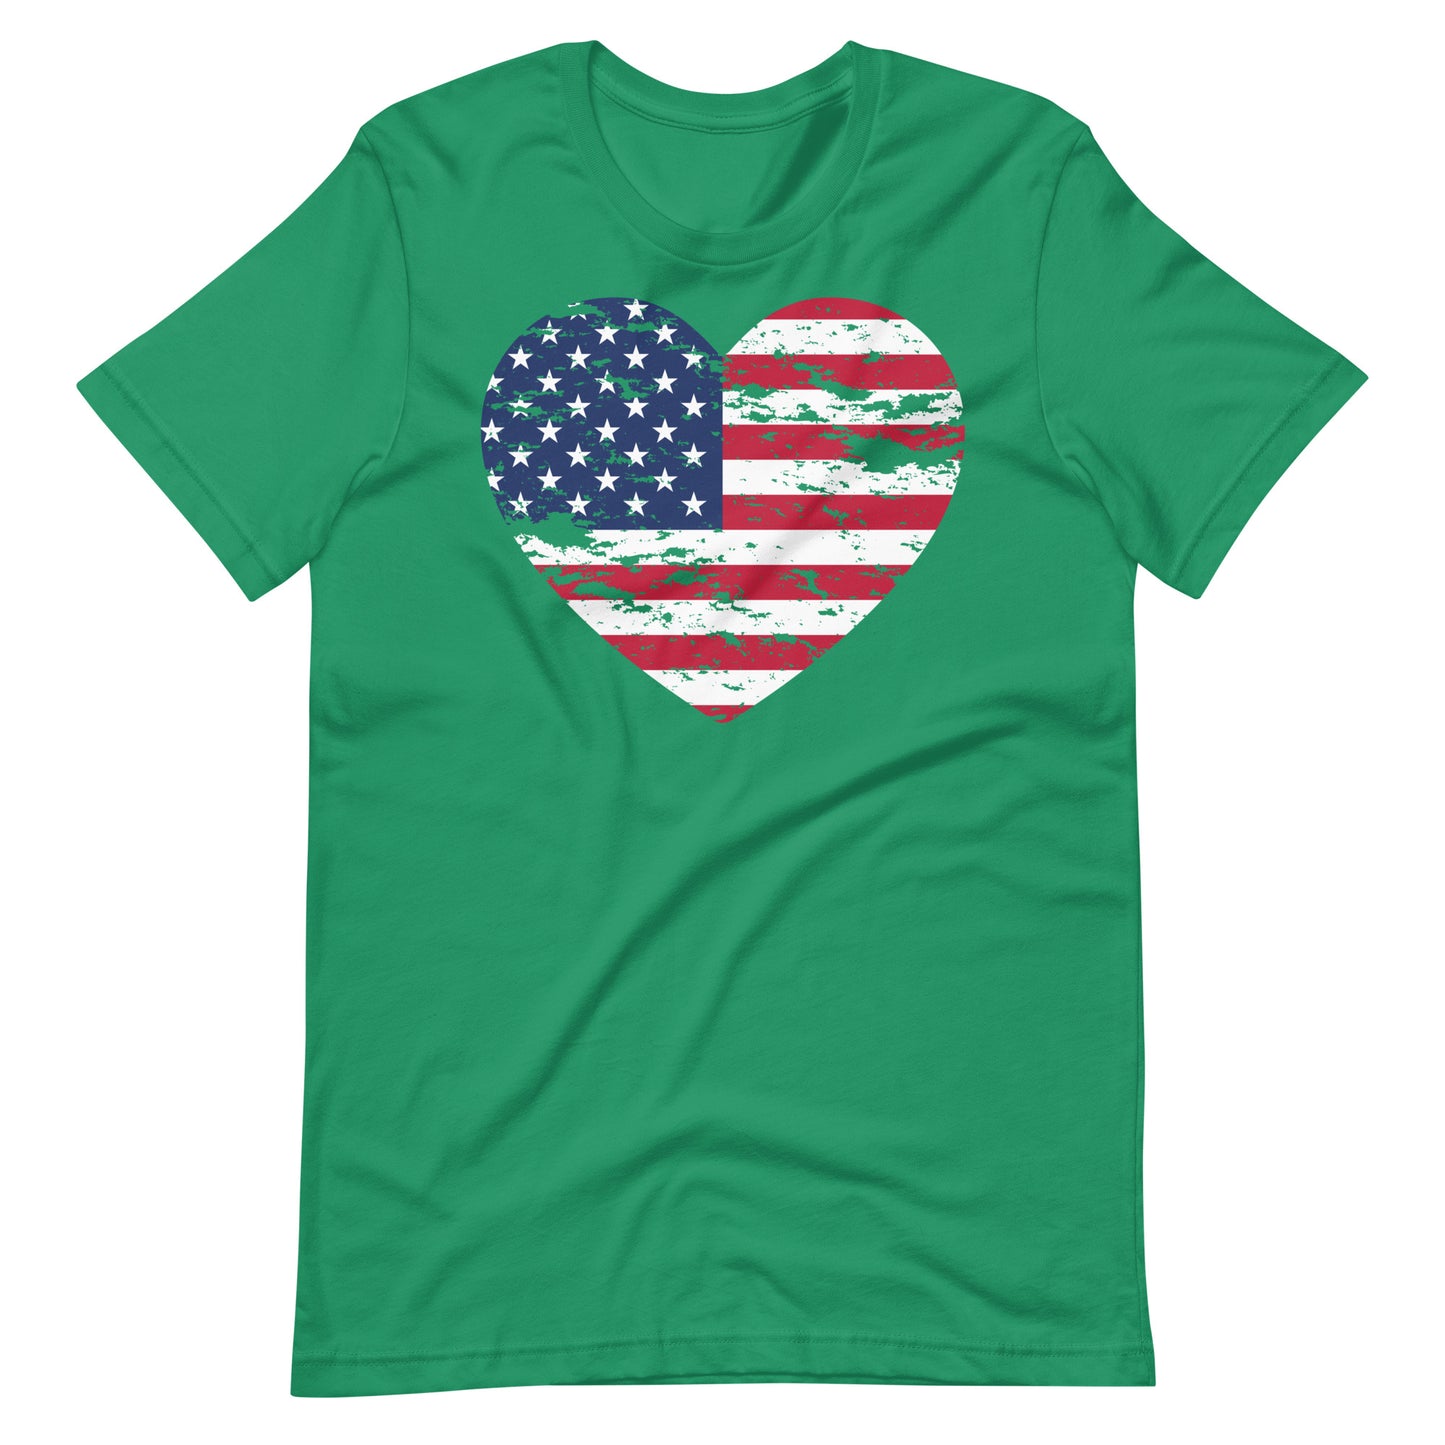 "Heart of America" Unisex T-Shirt